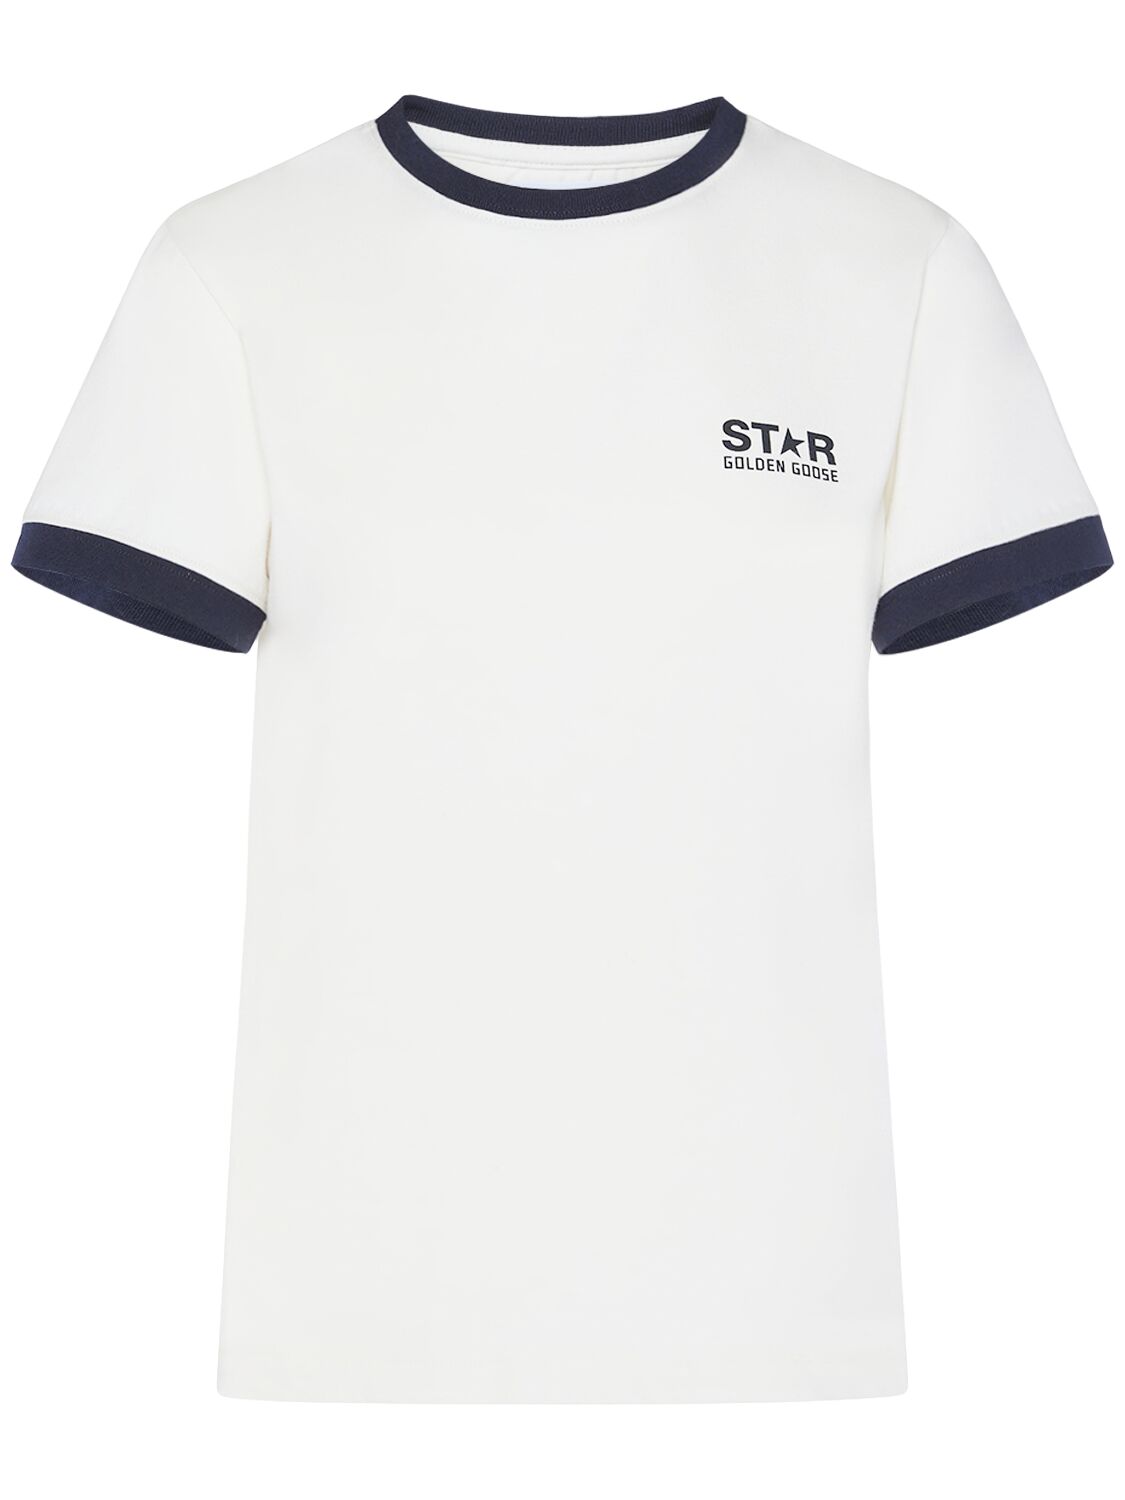 T-shirt Slim Fit Star In Cotone - GOLDEN GOOSE - Modalova